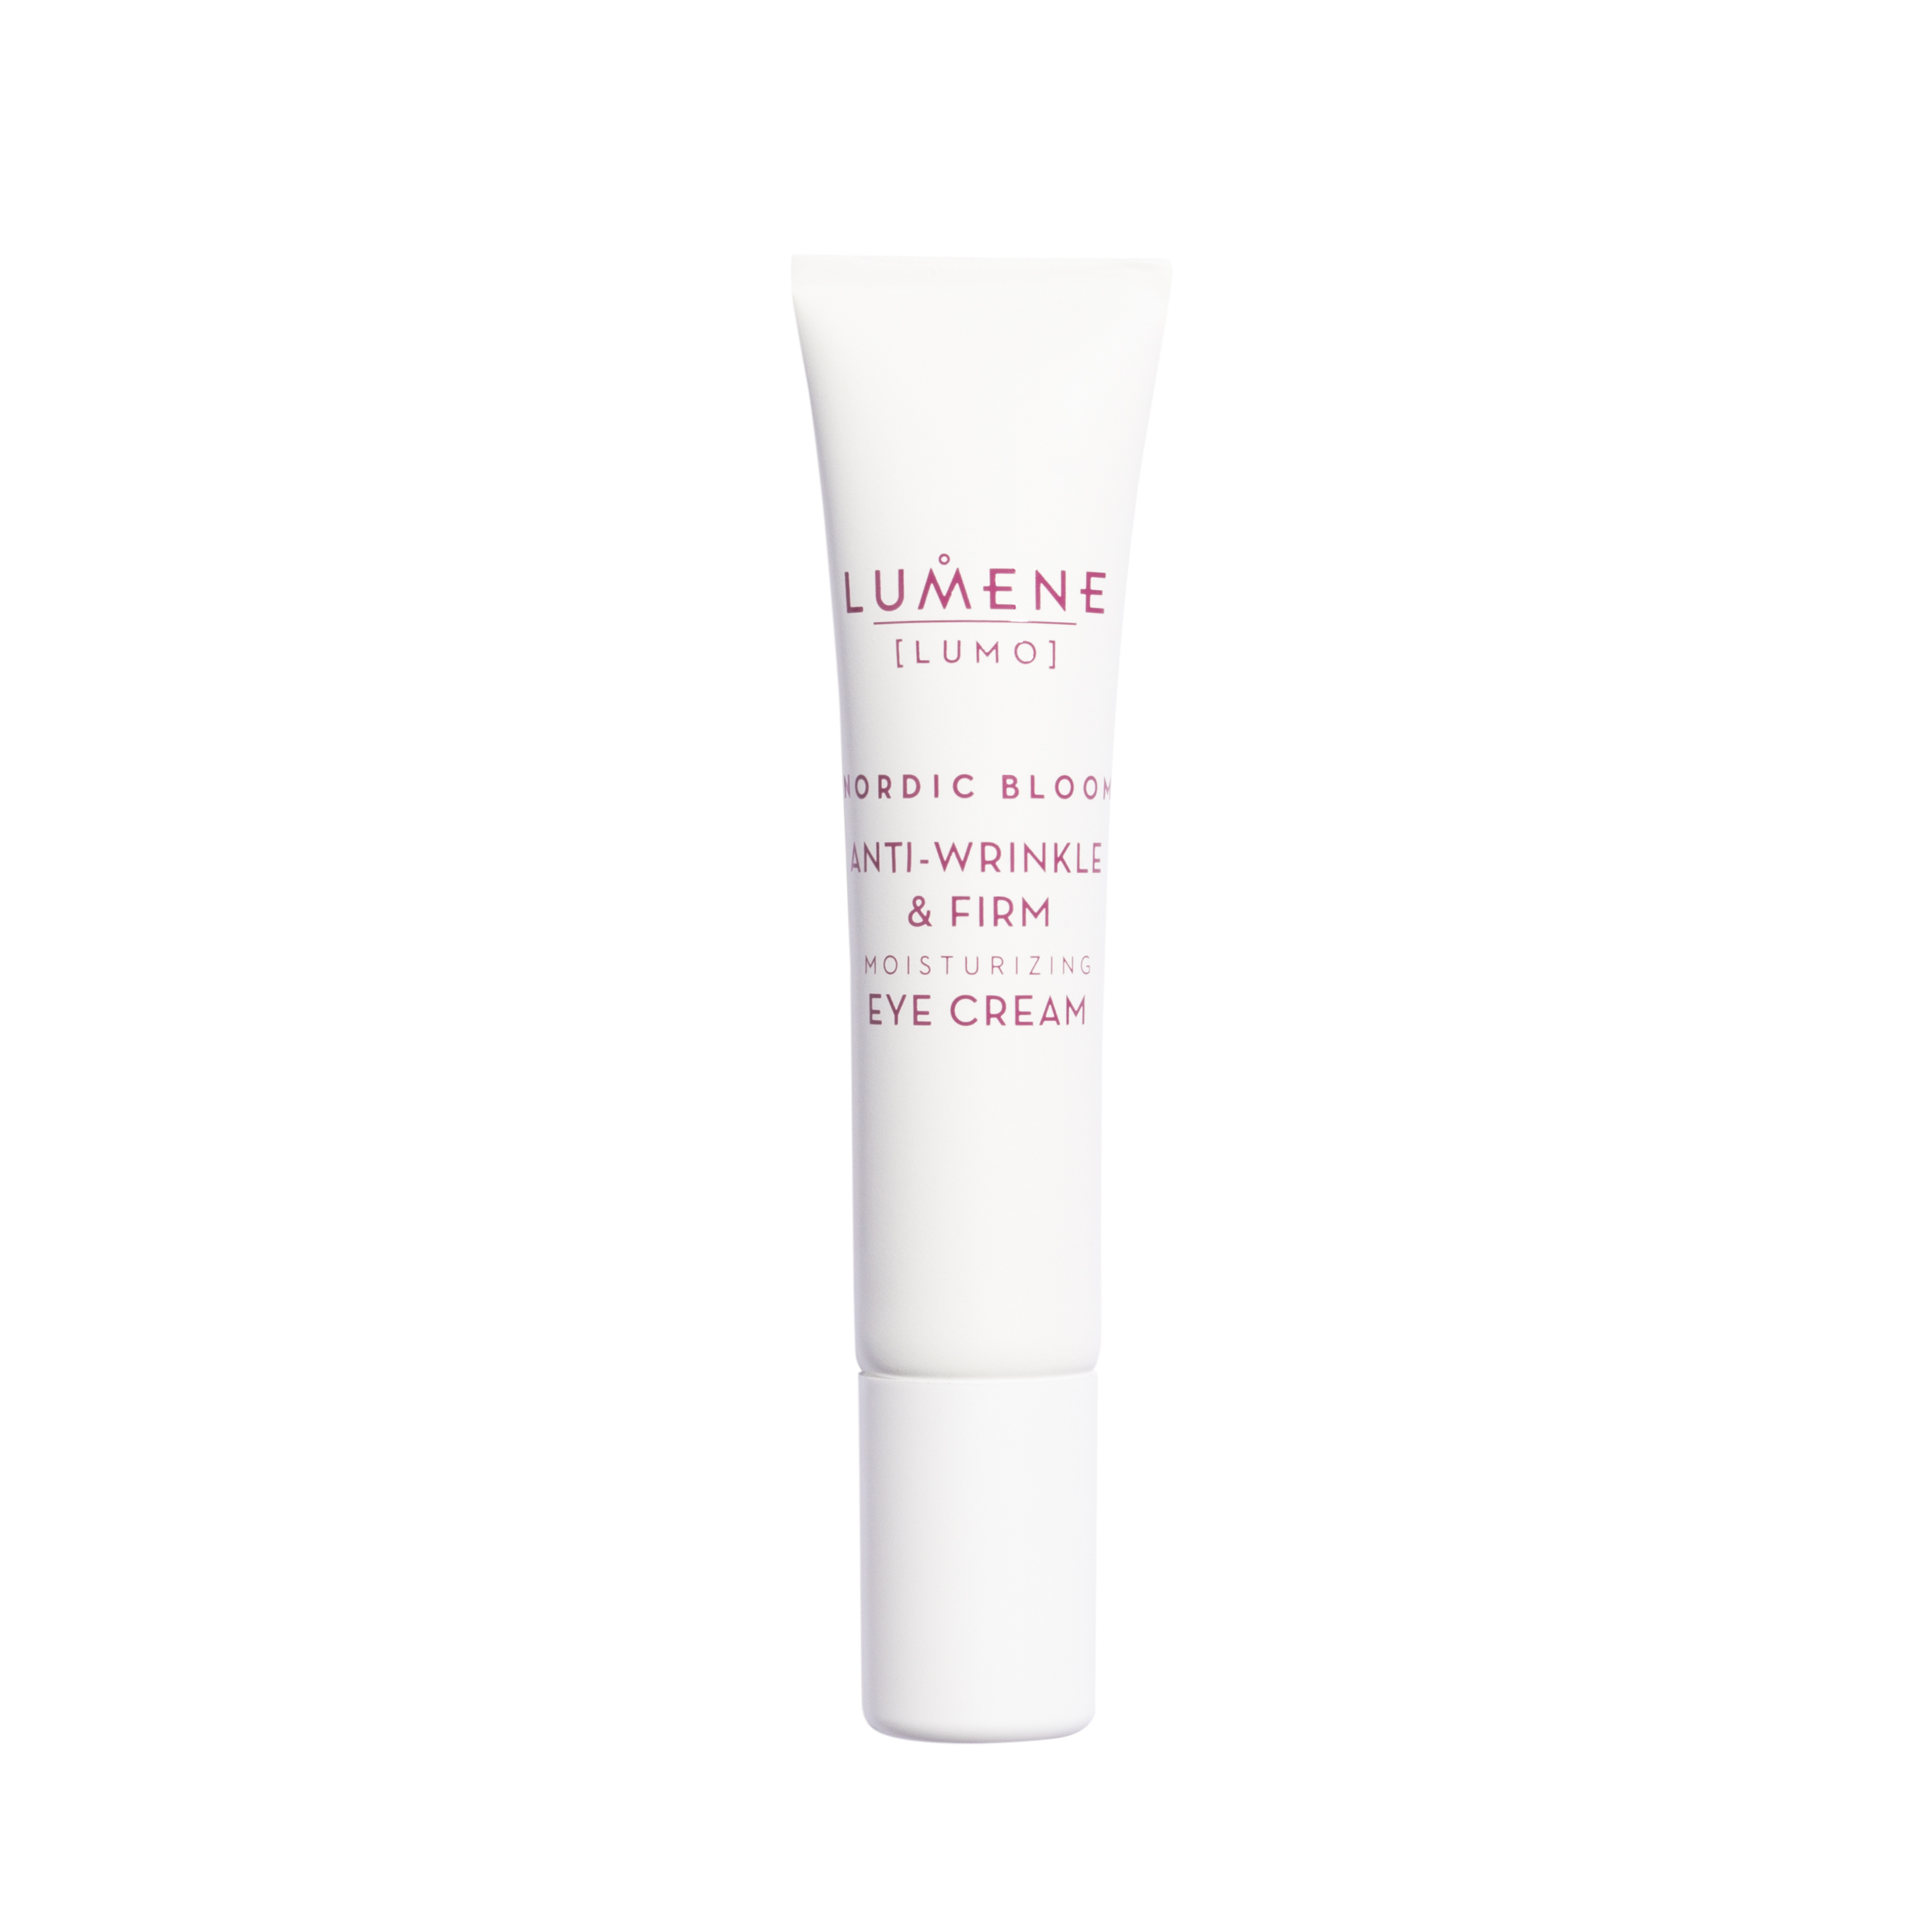 Lumene Nordic Bloom Anti-Wrinkle & Firm Moisturizing Eye Cream, 15 ml